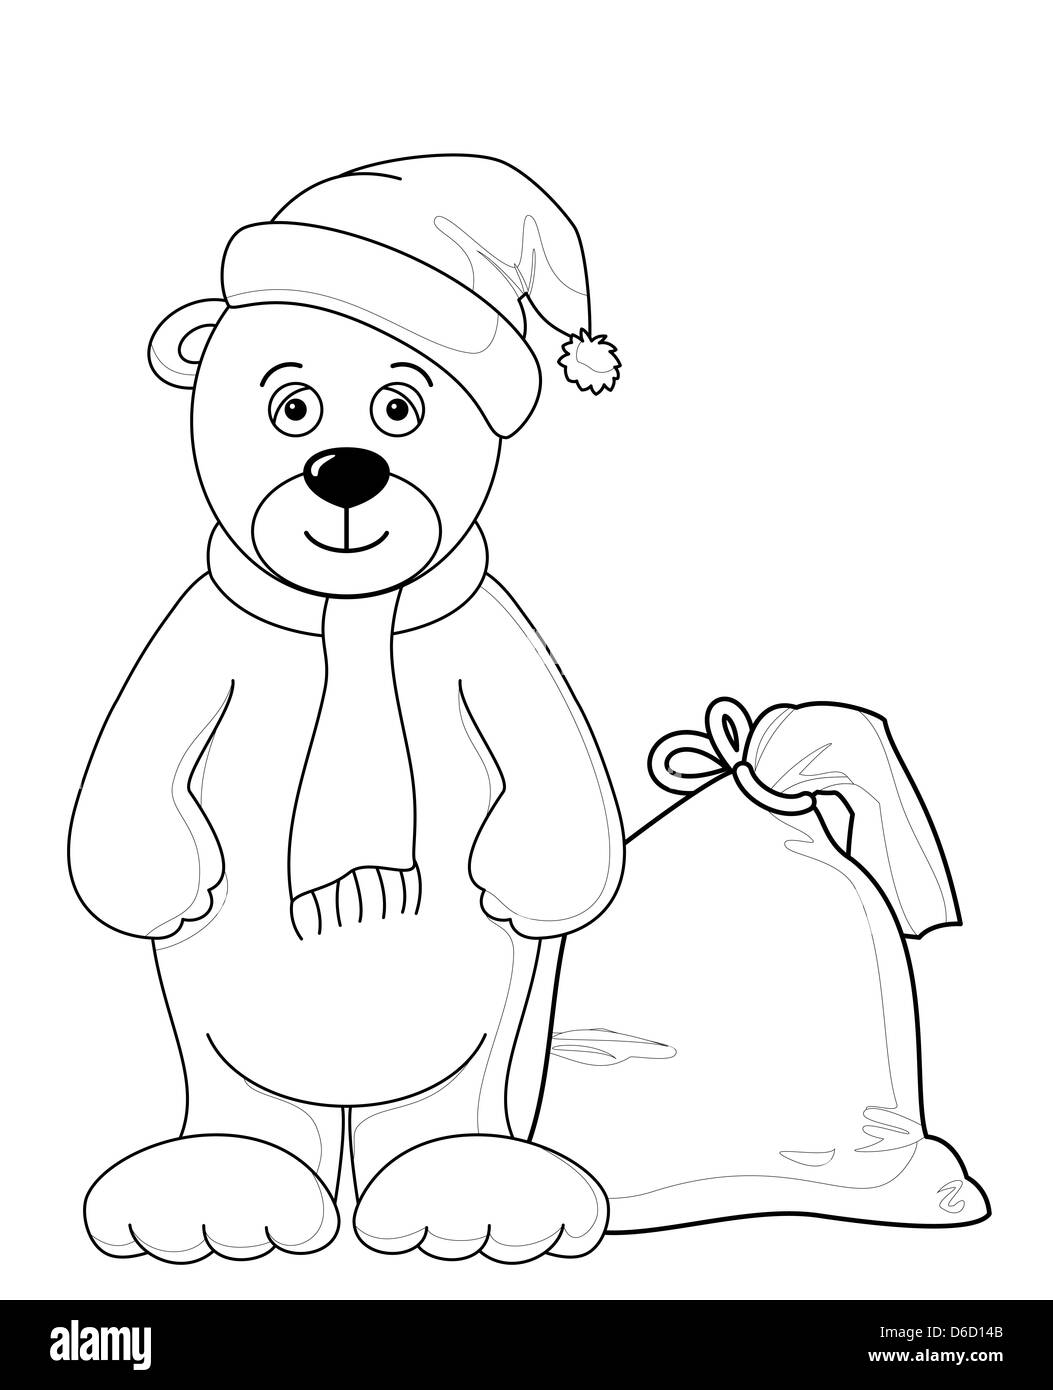 Teddy bear Santa Claus, contours Stock Photo